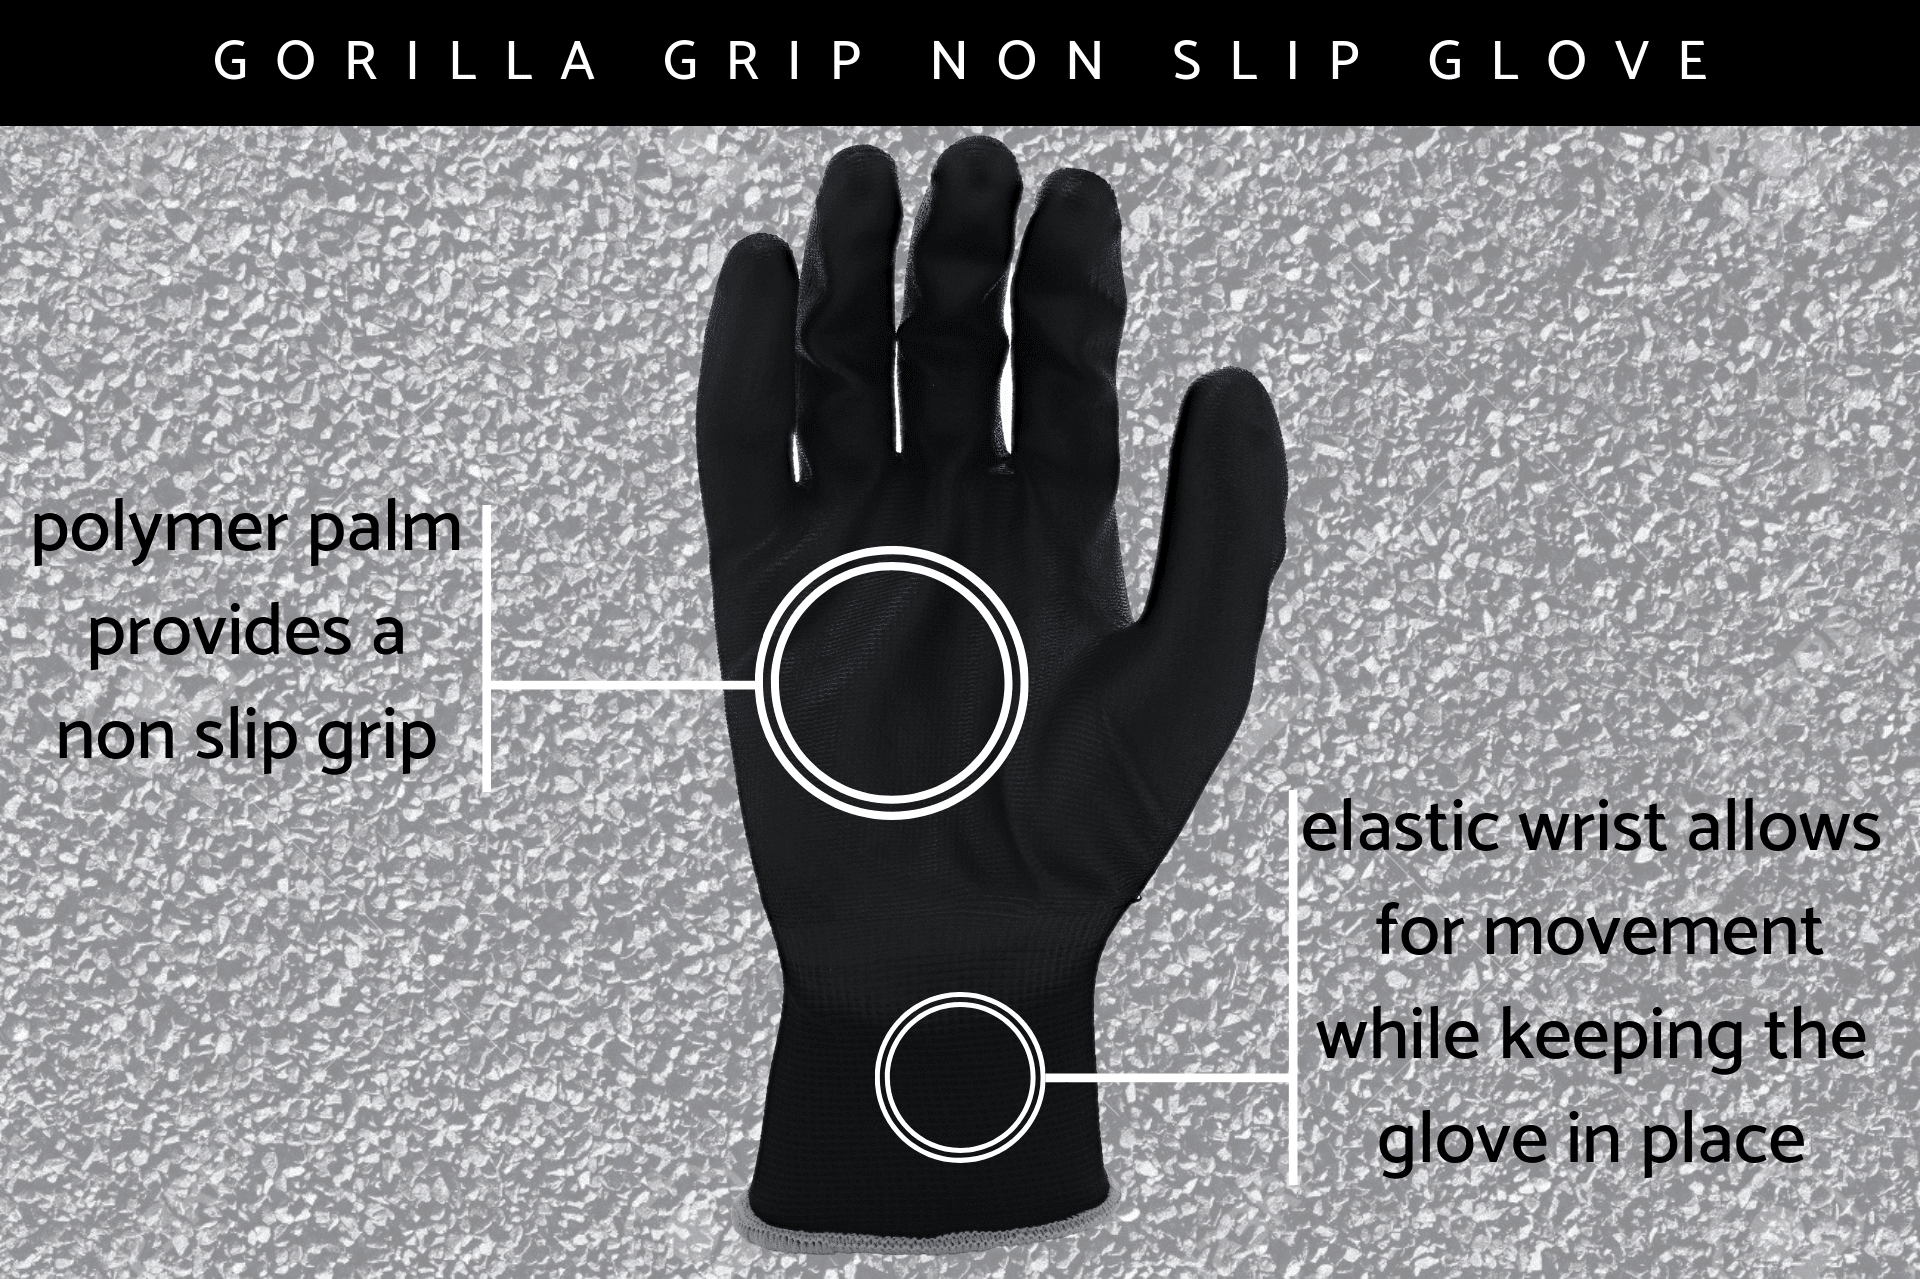 GORILLA GRIP Large TRAX Extreme Grip Work Gloves 25487-054 - The